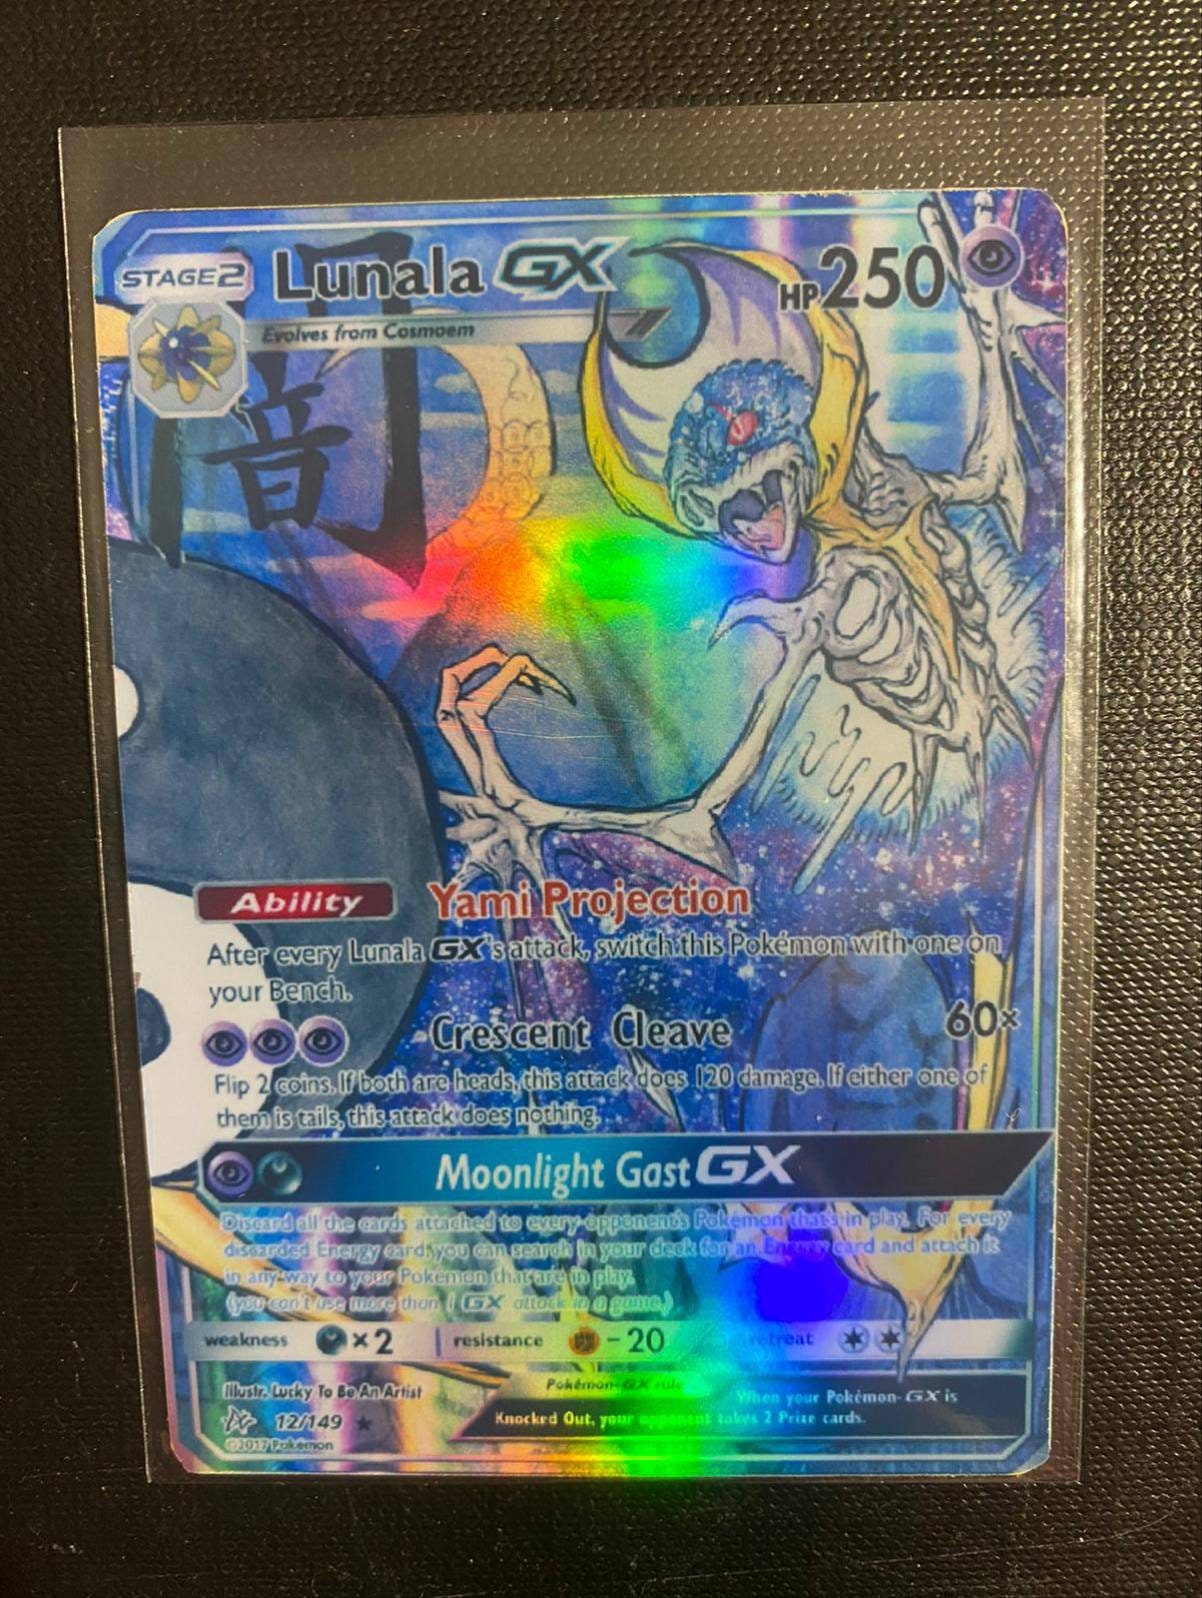 Mavin  LUNALA GX Pokemon card 153/149 RAINBOW FULL ART Sun and